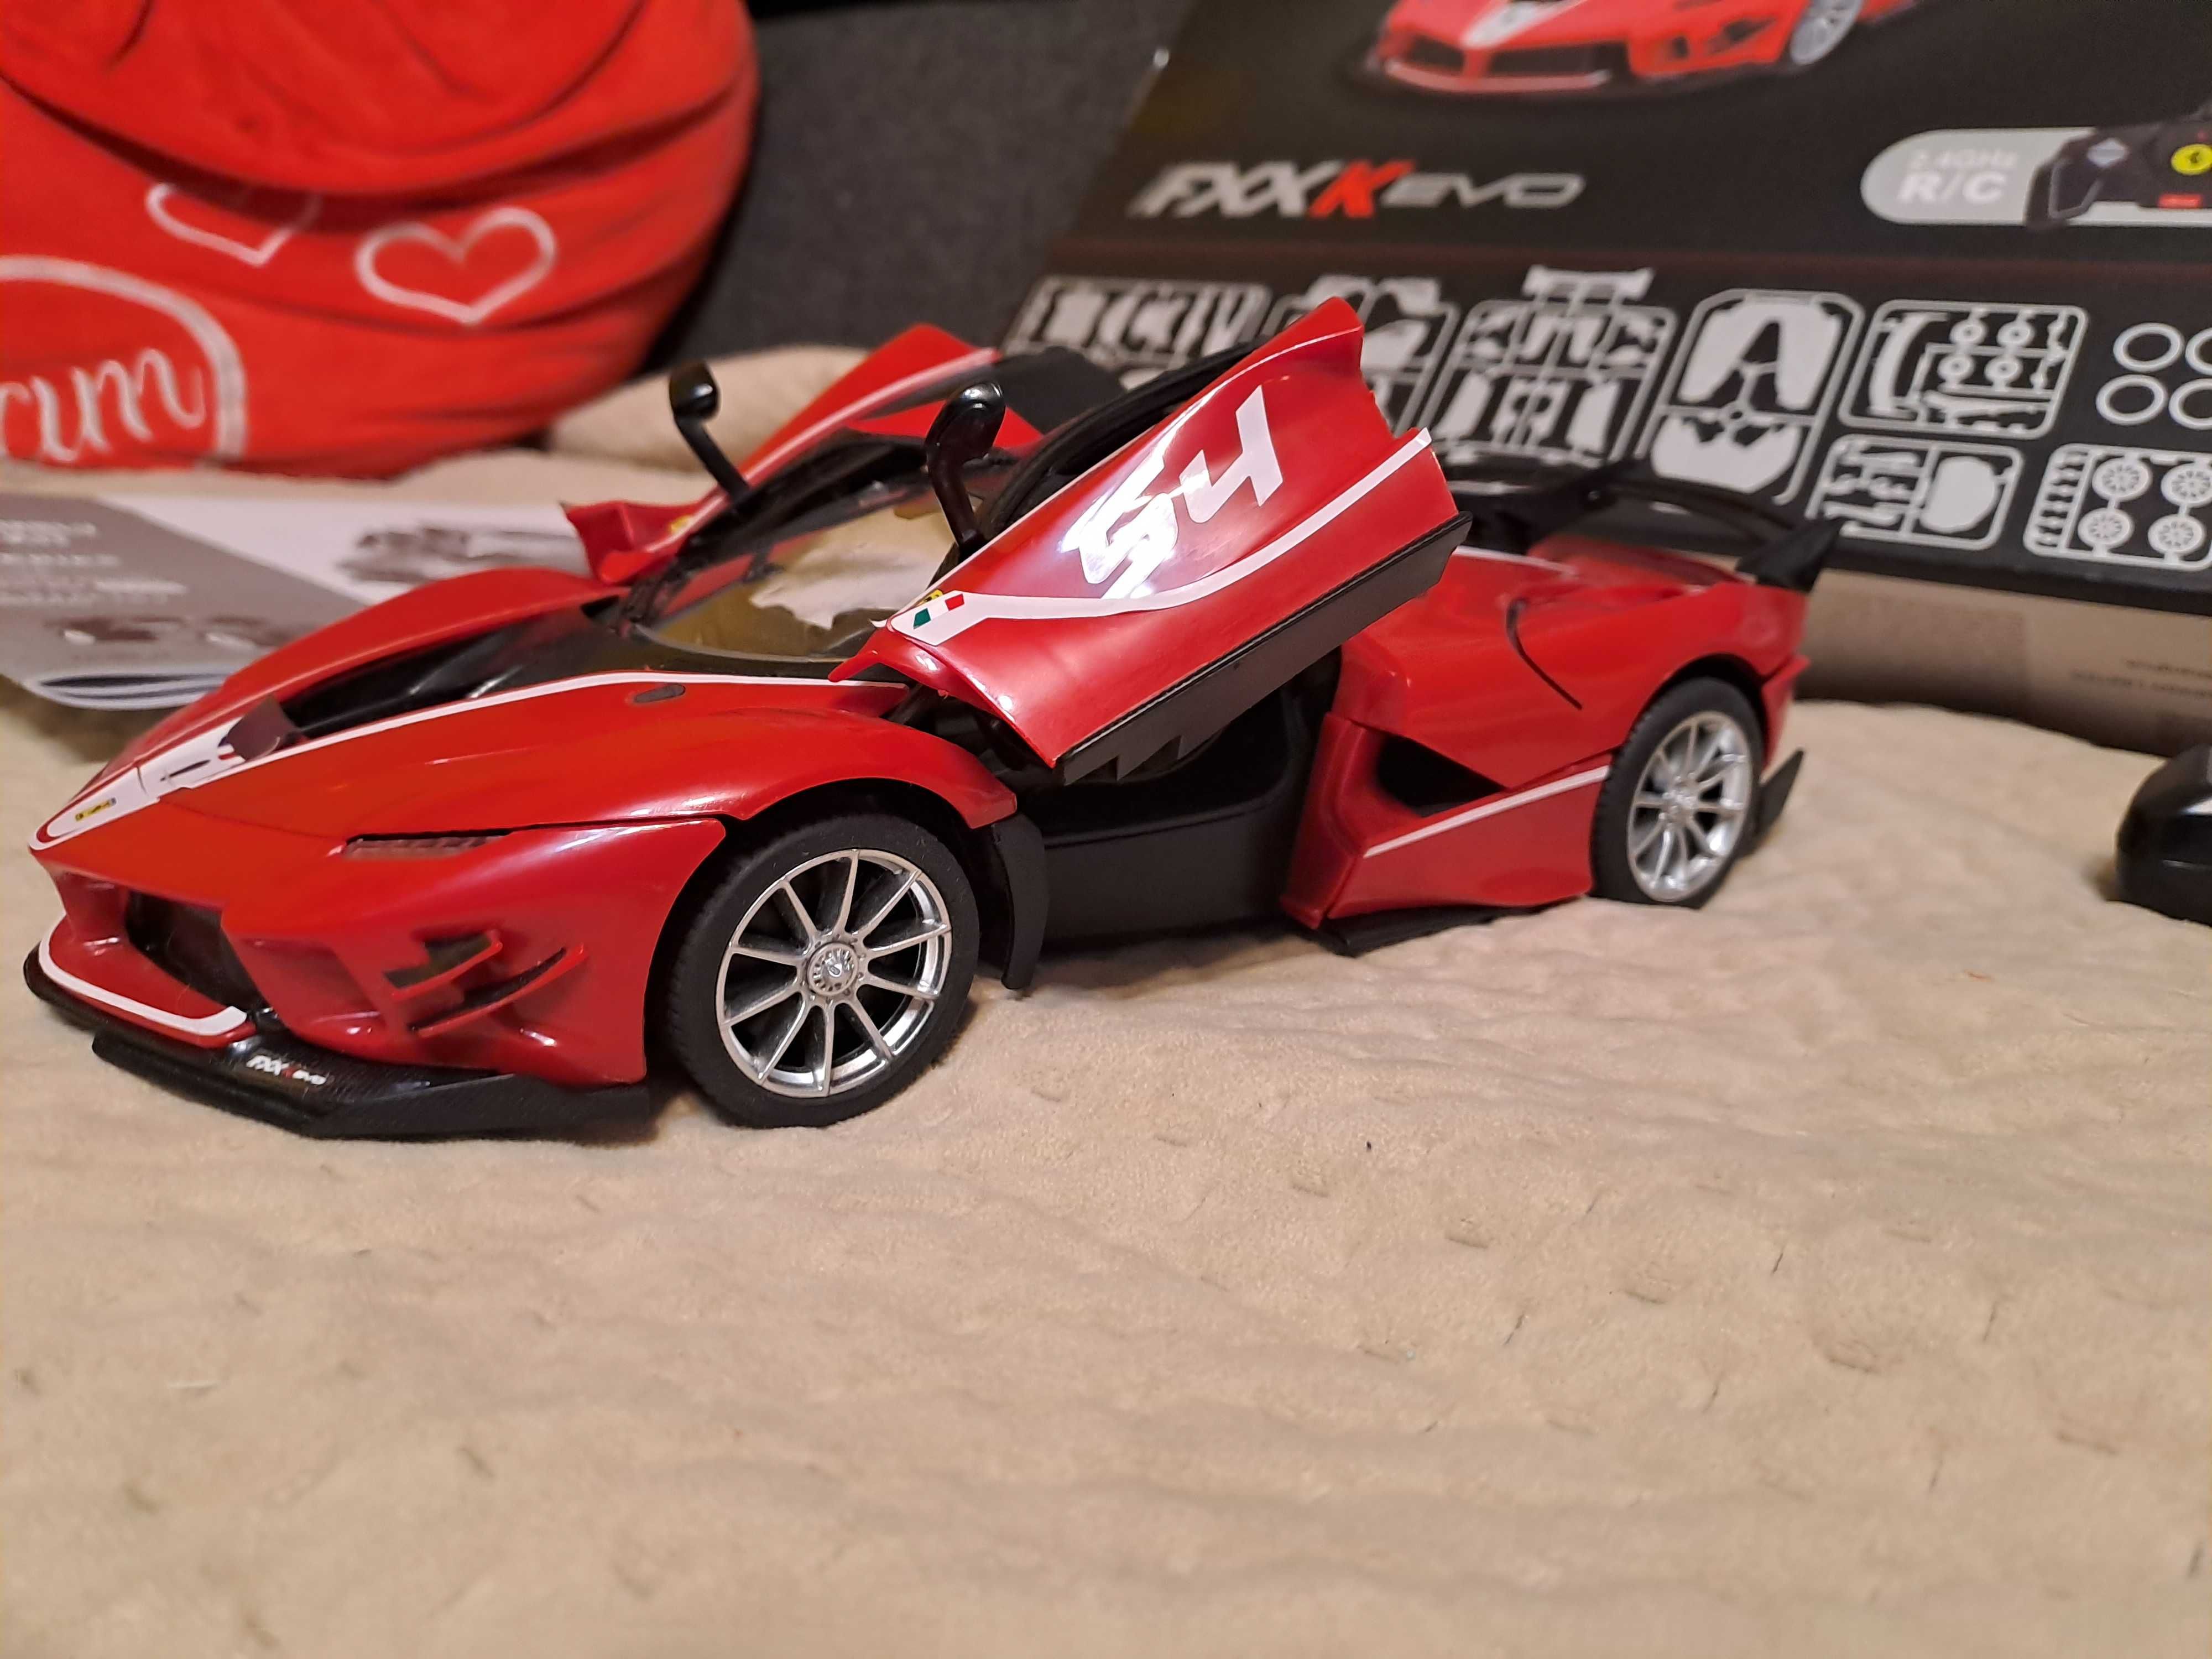 Samochód Ferrari RC Assembly Model Kit